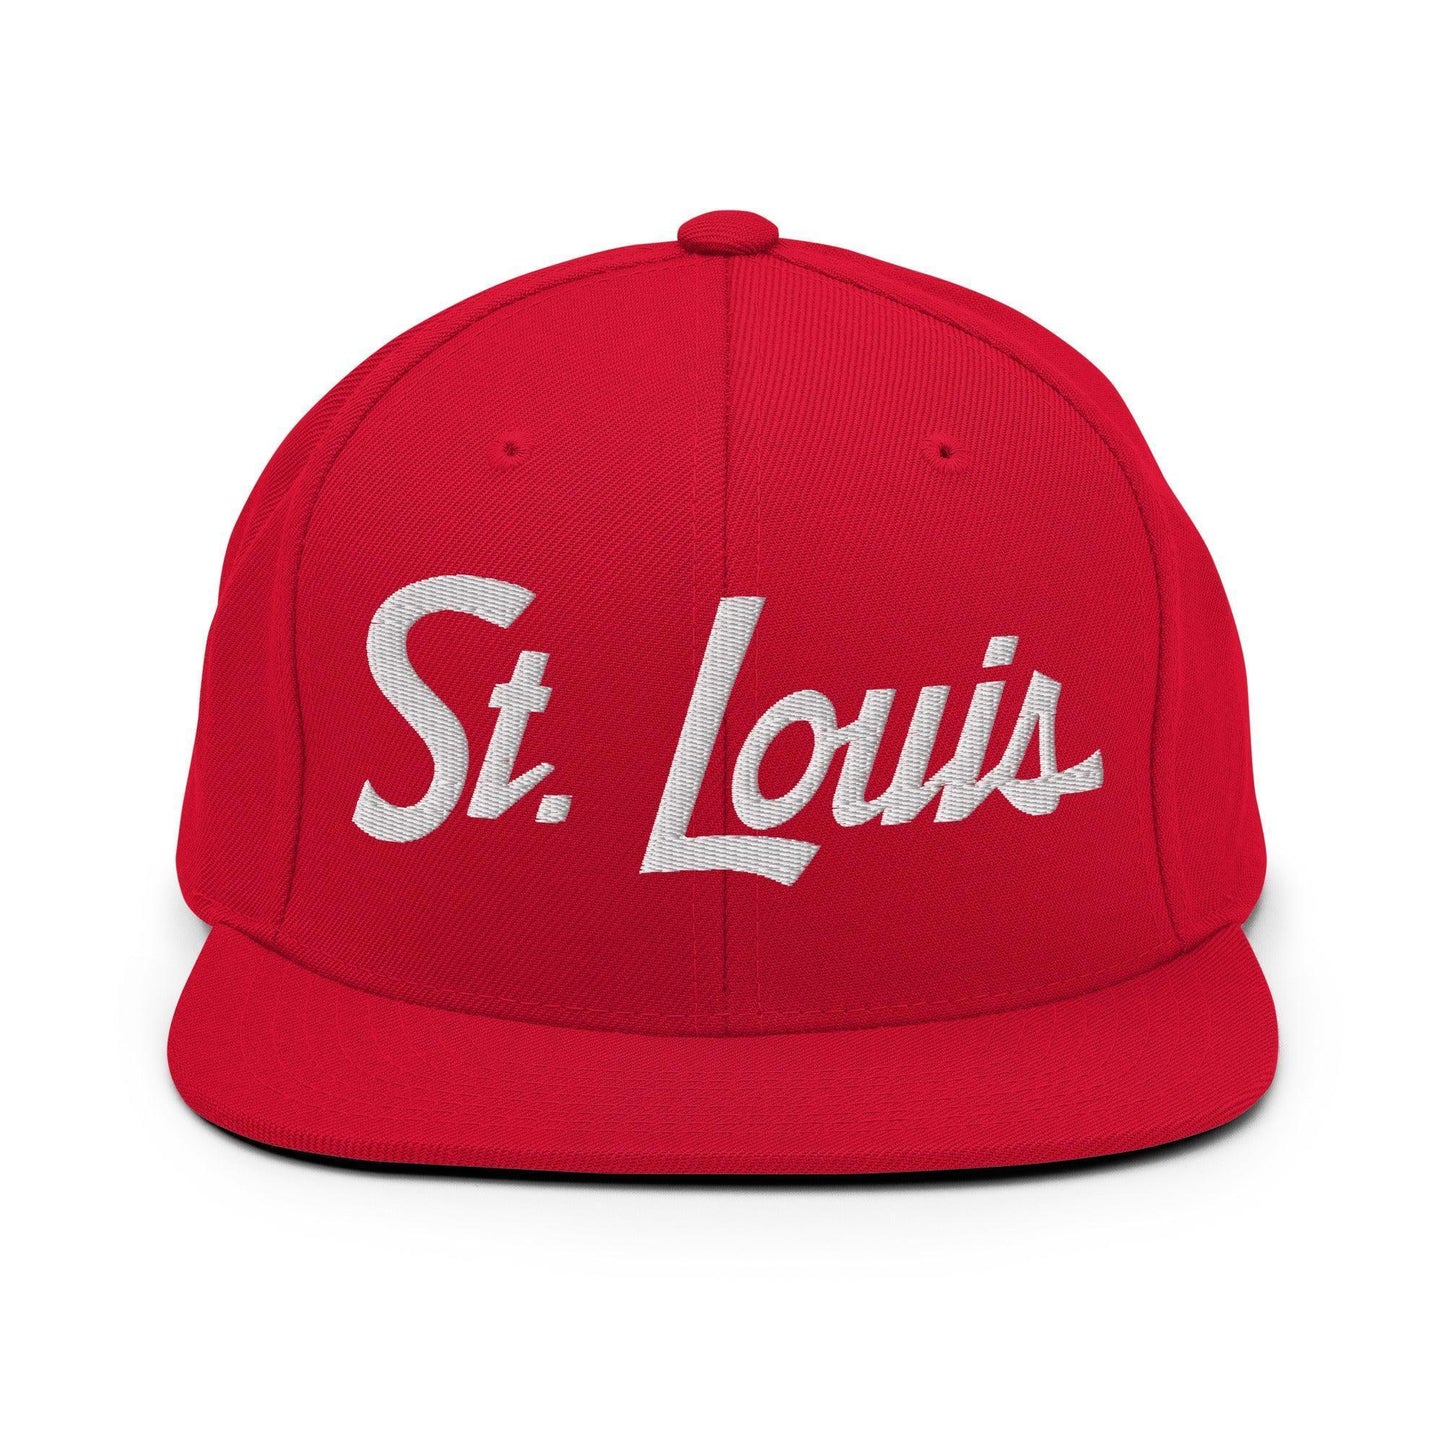 St. Louis Script Snapback Hat Red